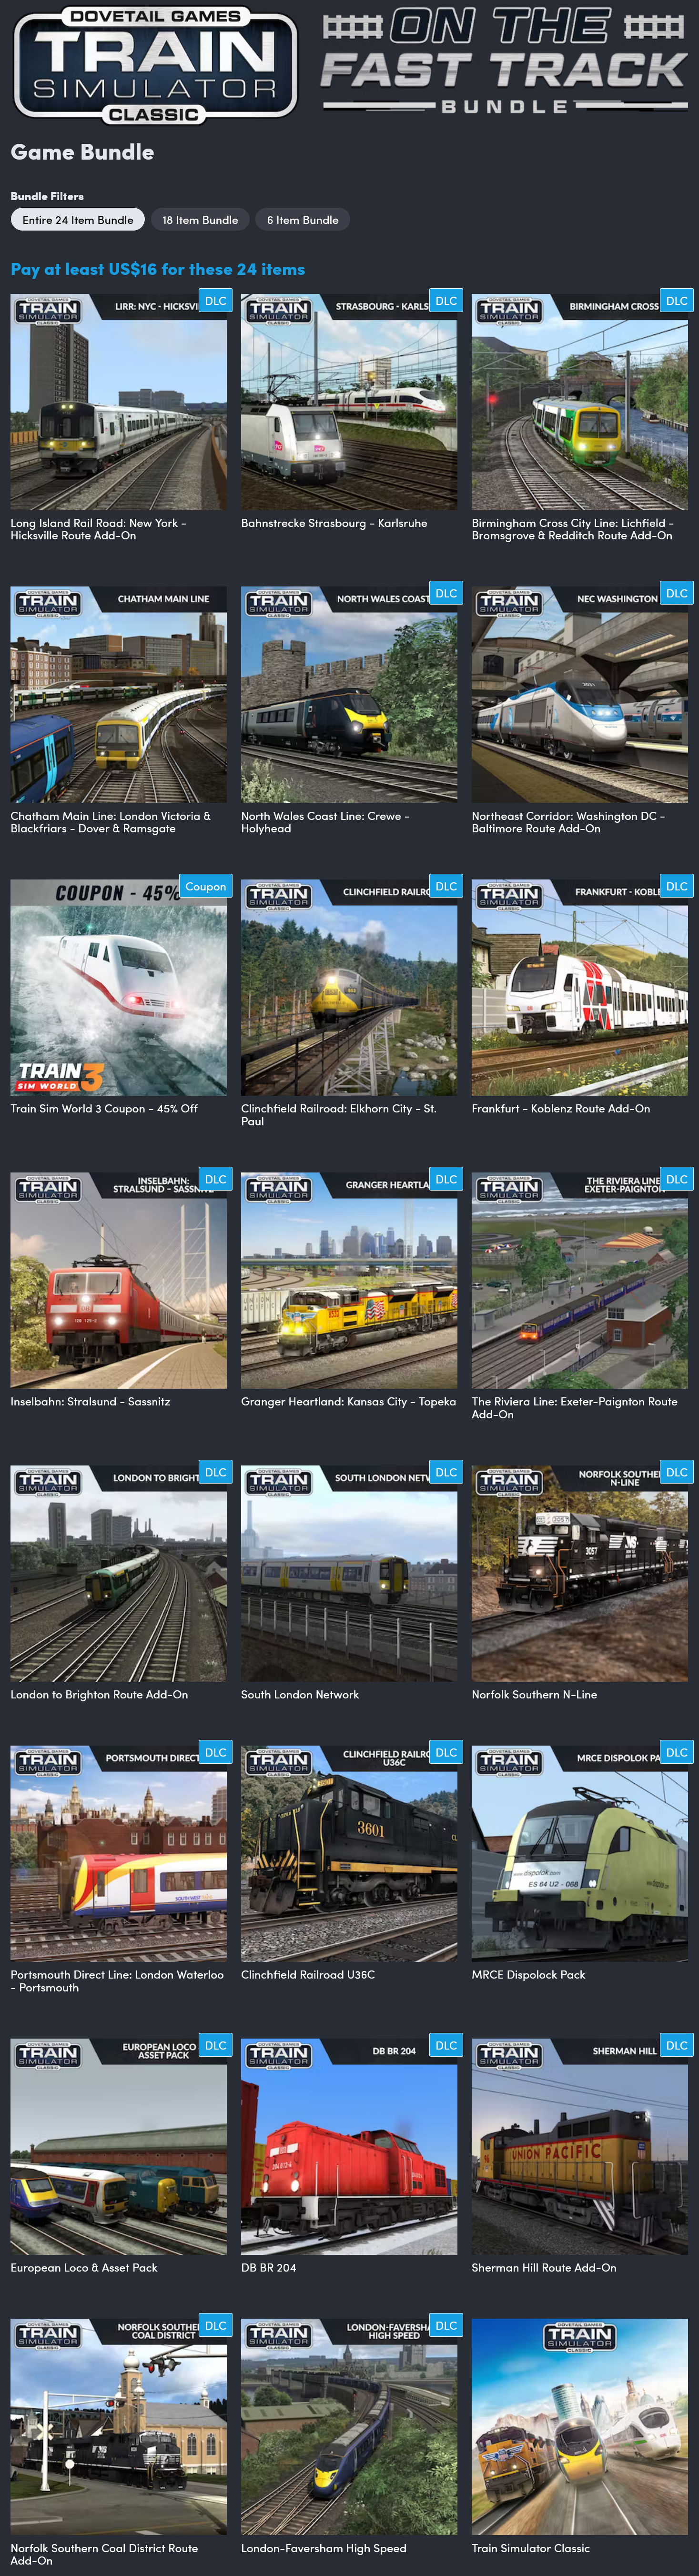 Screenshot 2023-03-11 at 10-50-11 Train Simulator Classic On the Fast Track.png